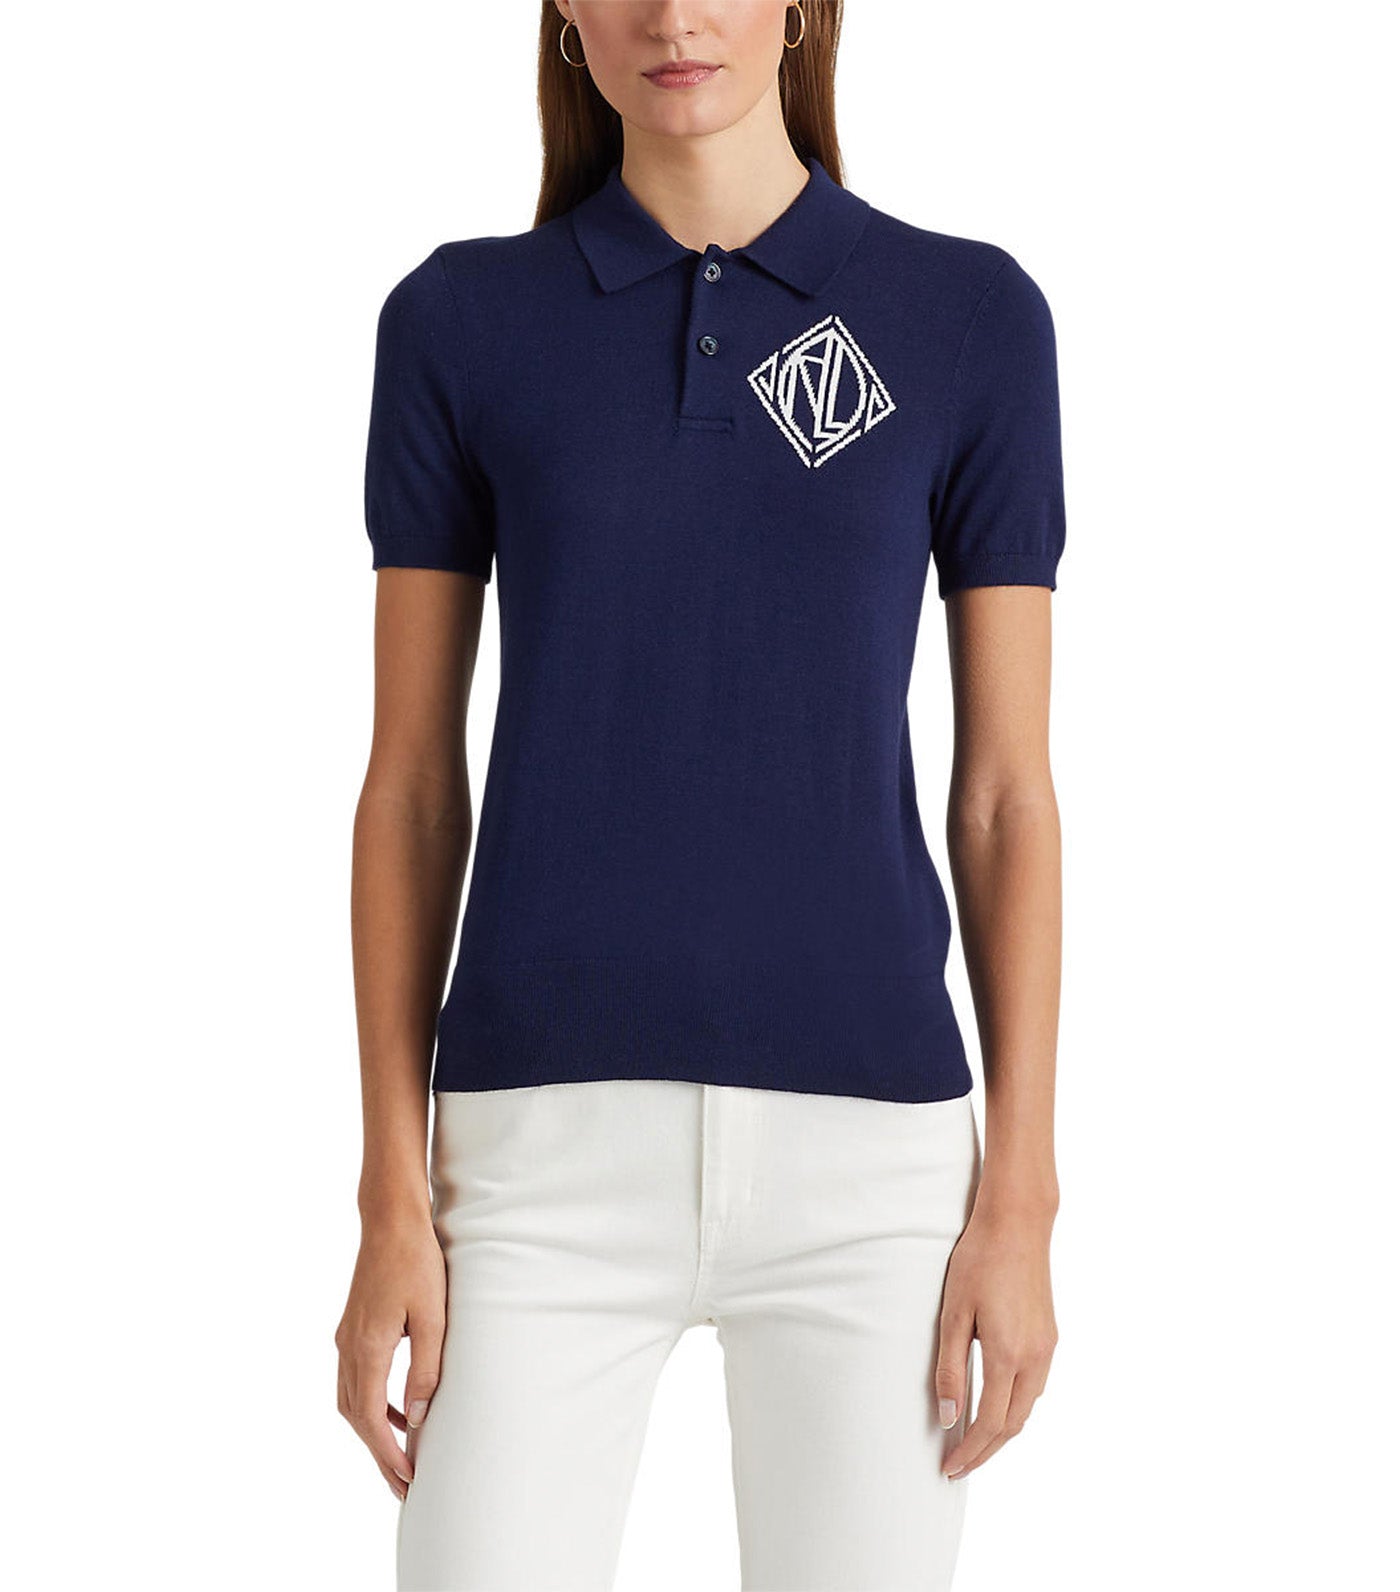 Women's Jersey Polo Shirt Navy